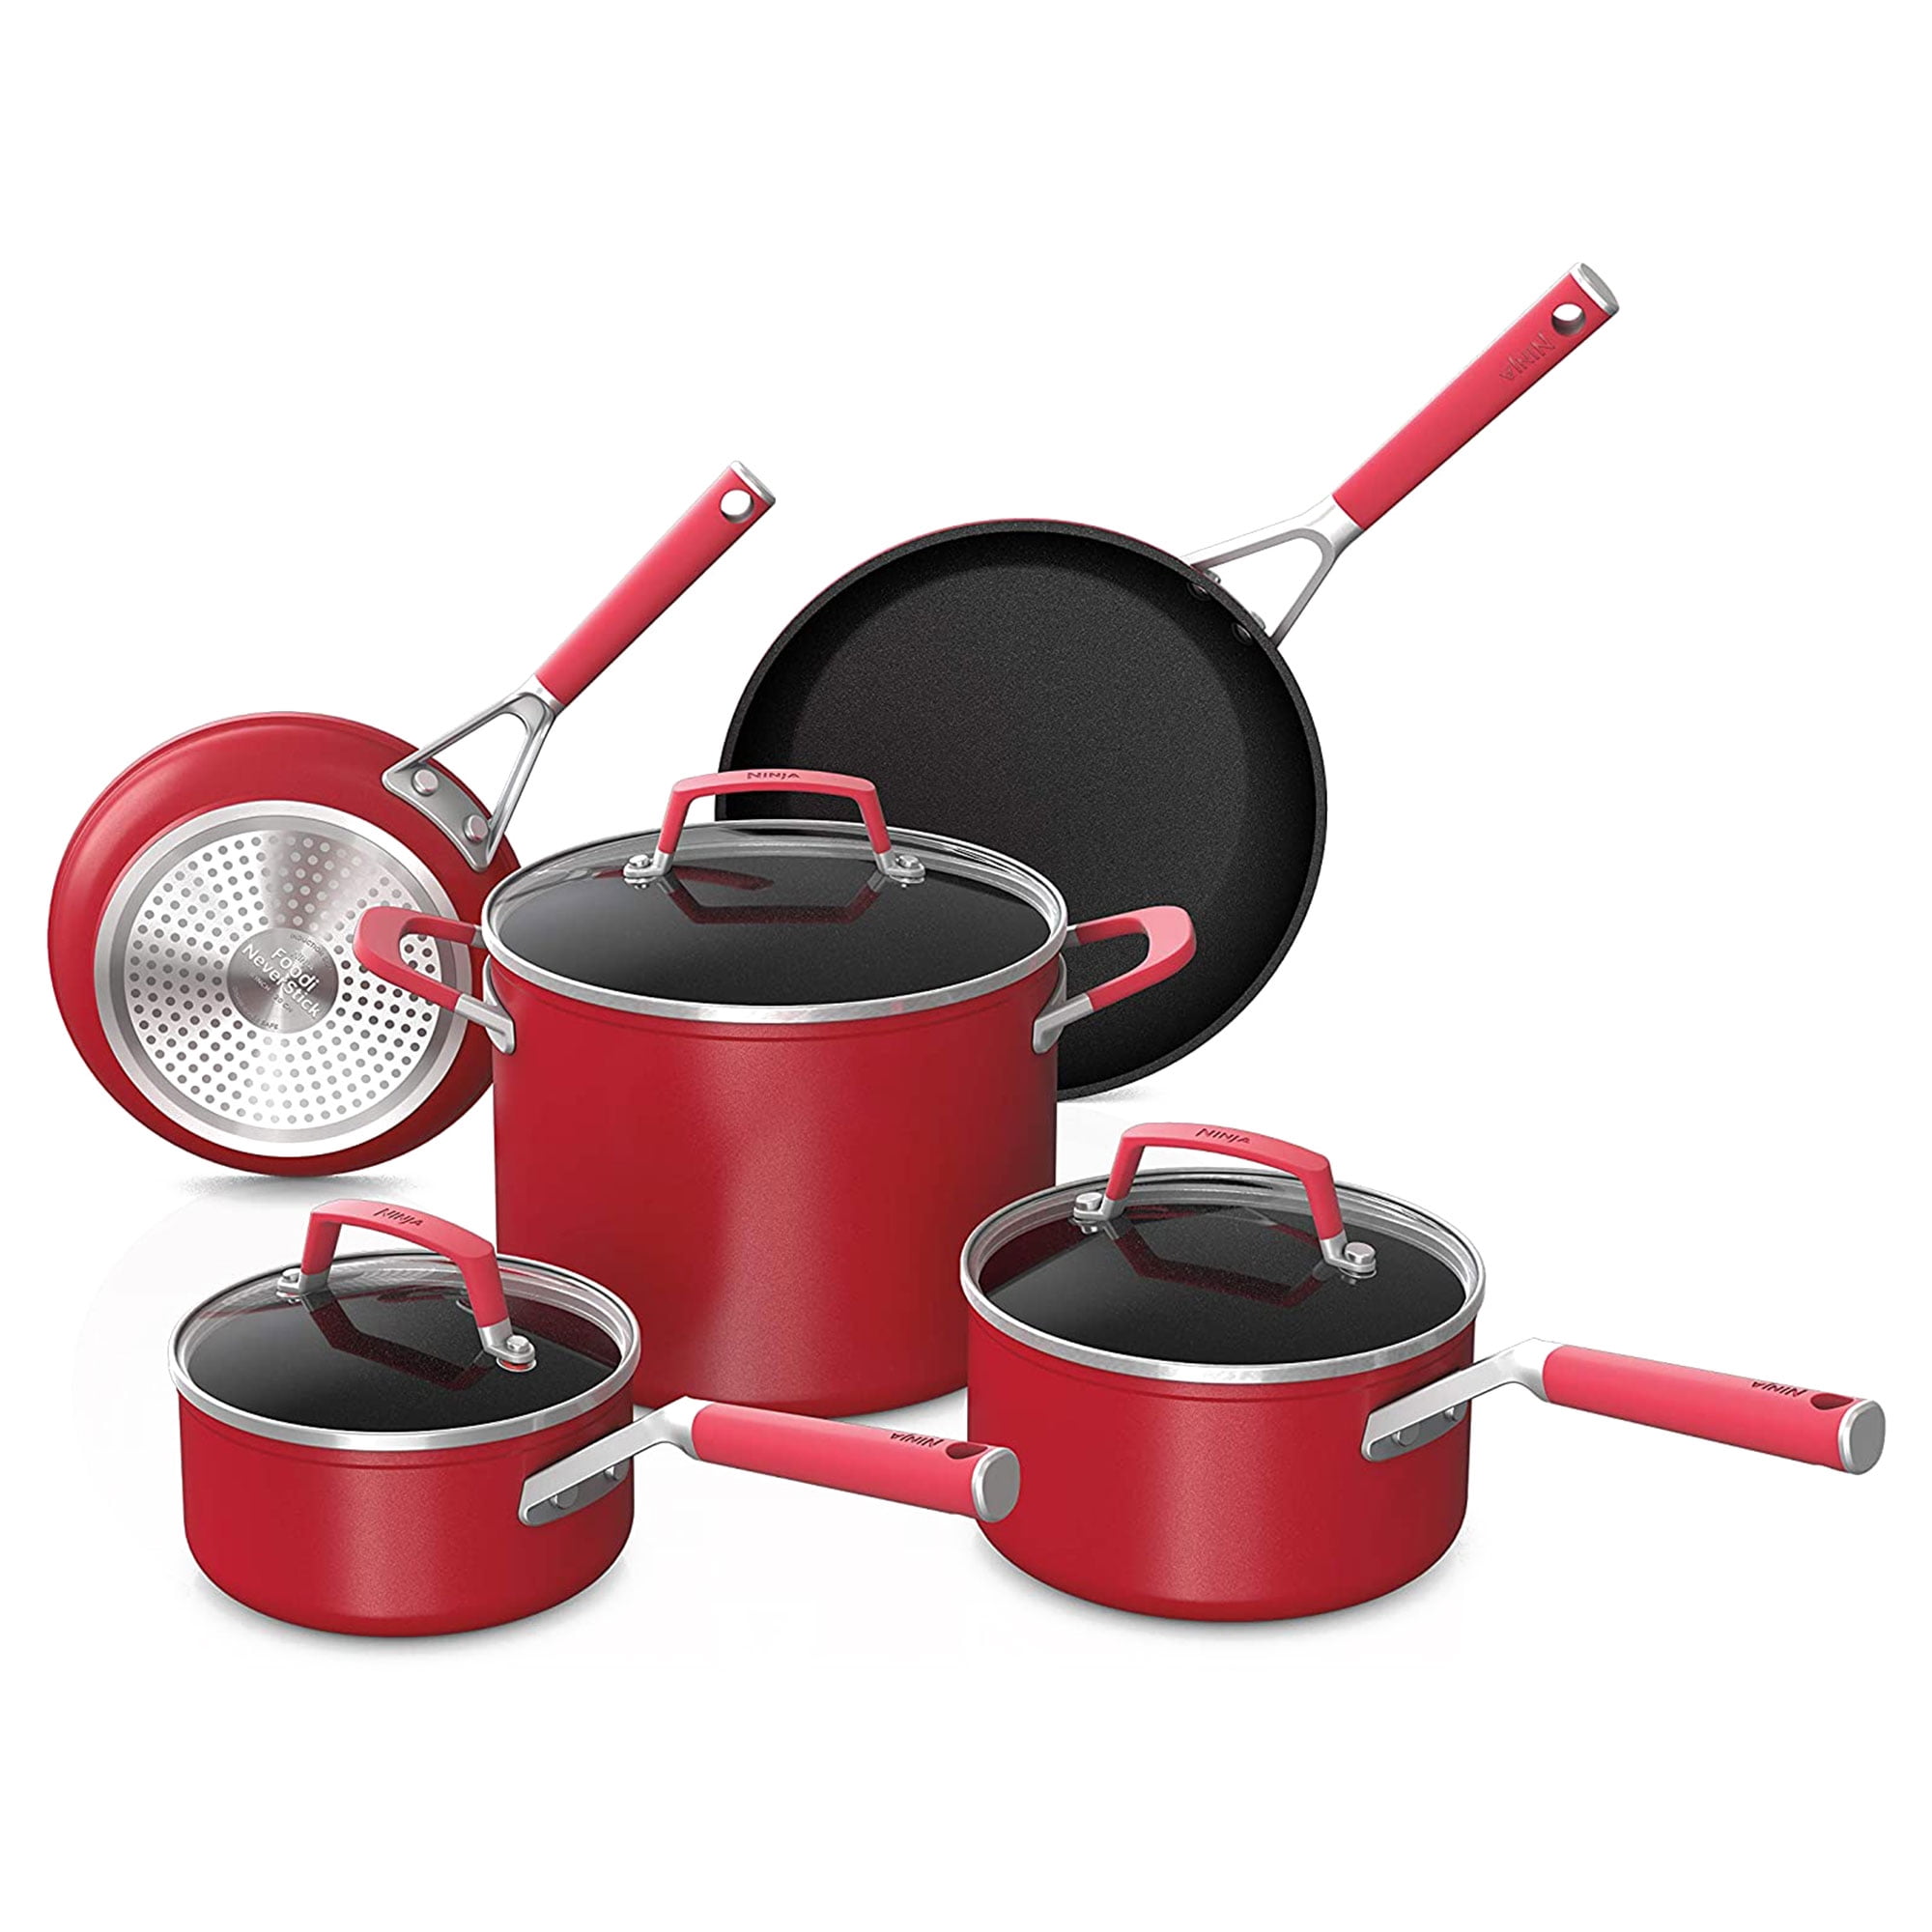 Ninja™ Foodi™ NeverStick™ Essential 14-Piece Cookware Set, Red, C19700RD -  Walmart.com